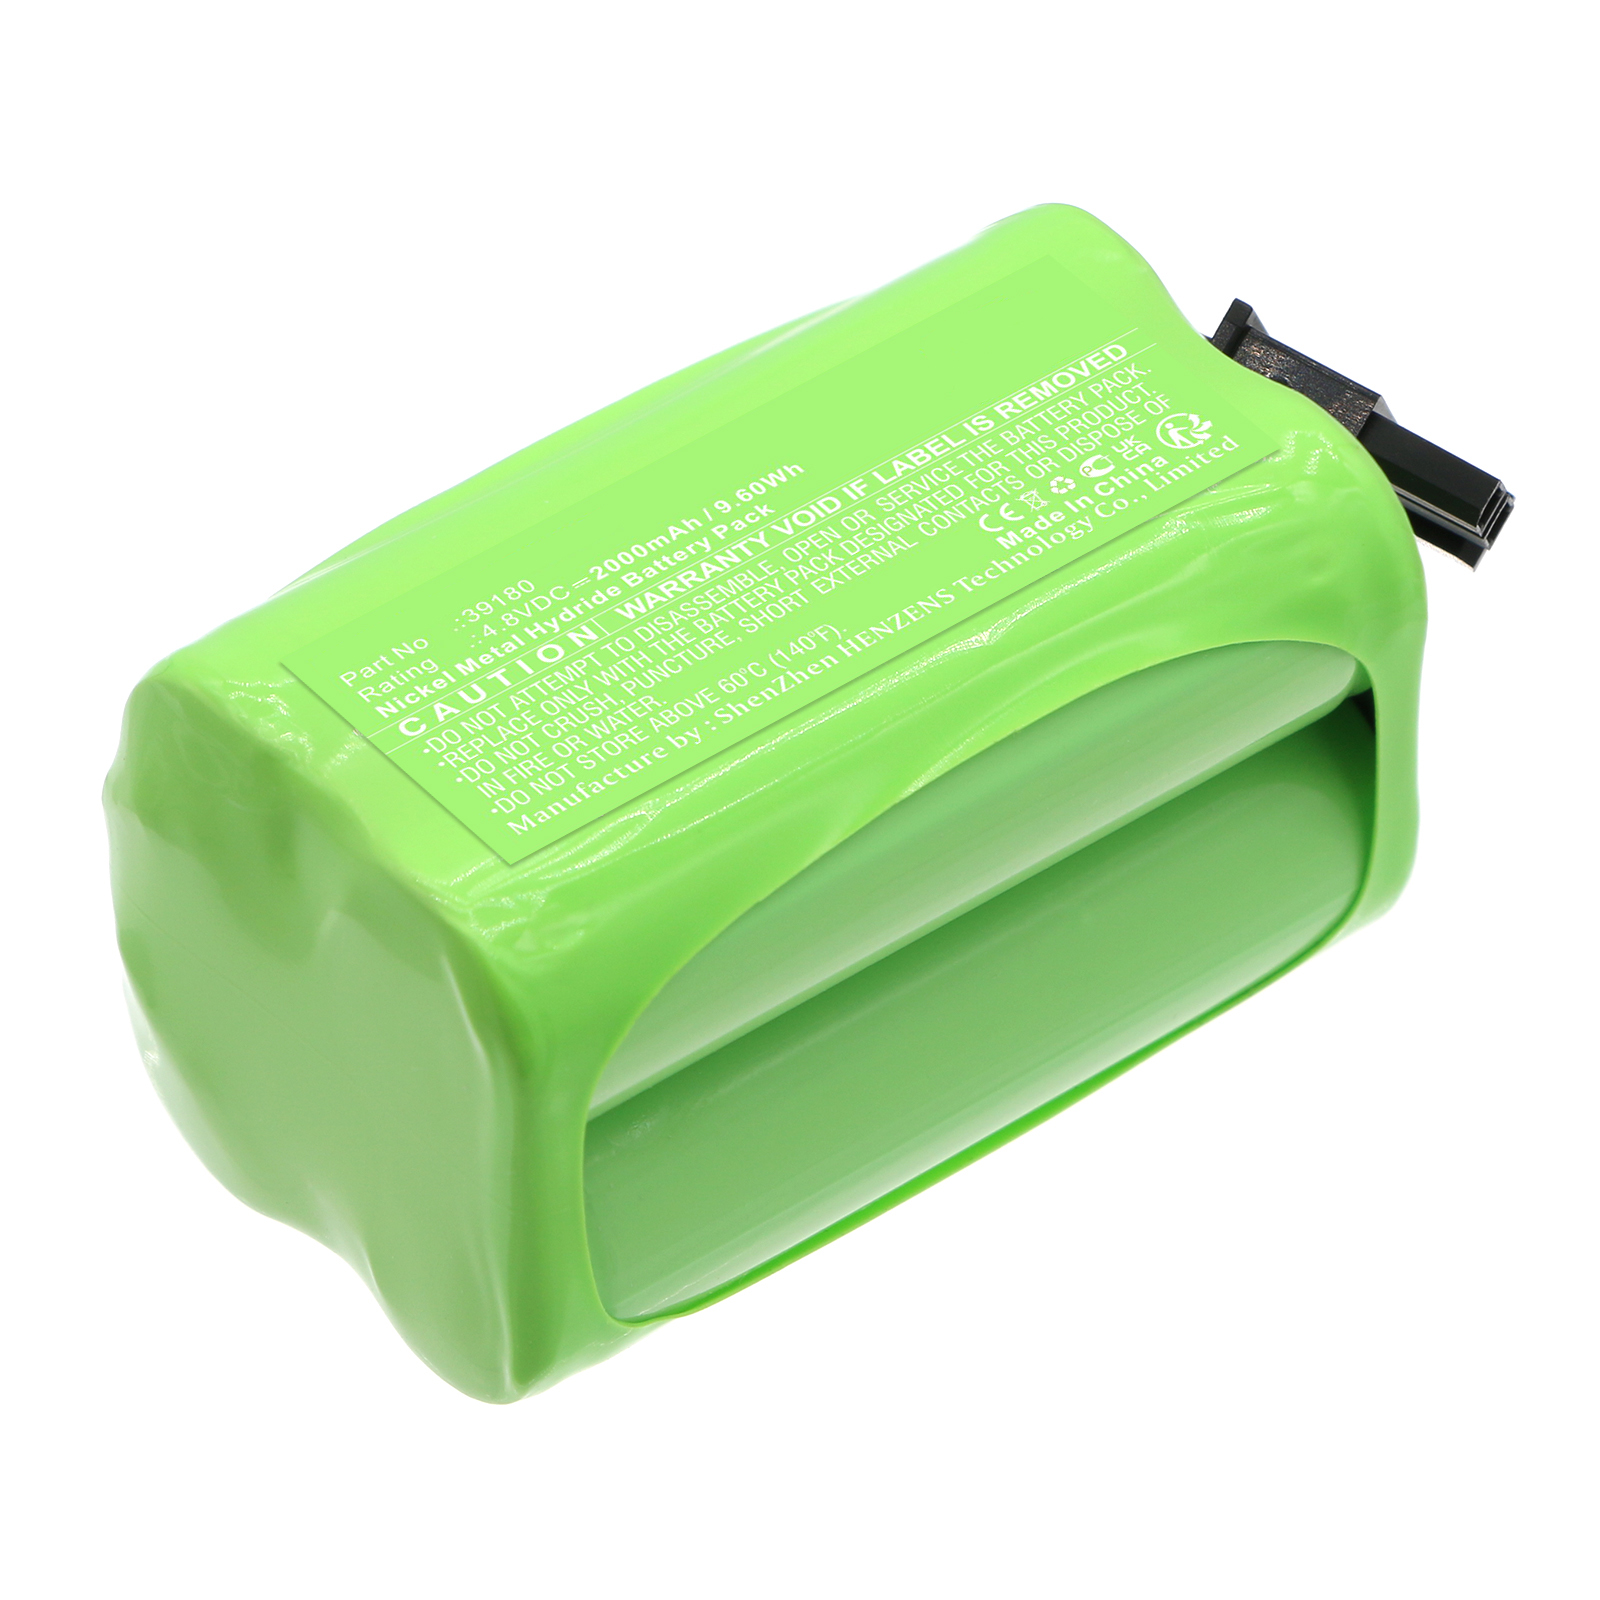 Synergy Digital Alarm System Battery, Compatible with Grothe 39180 Alarm System Battery (Ni-MH, 4.8V, 2000mAh)